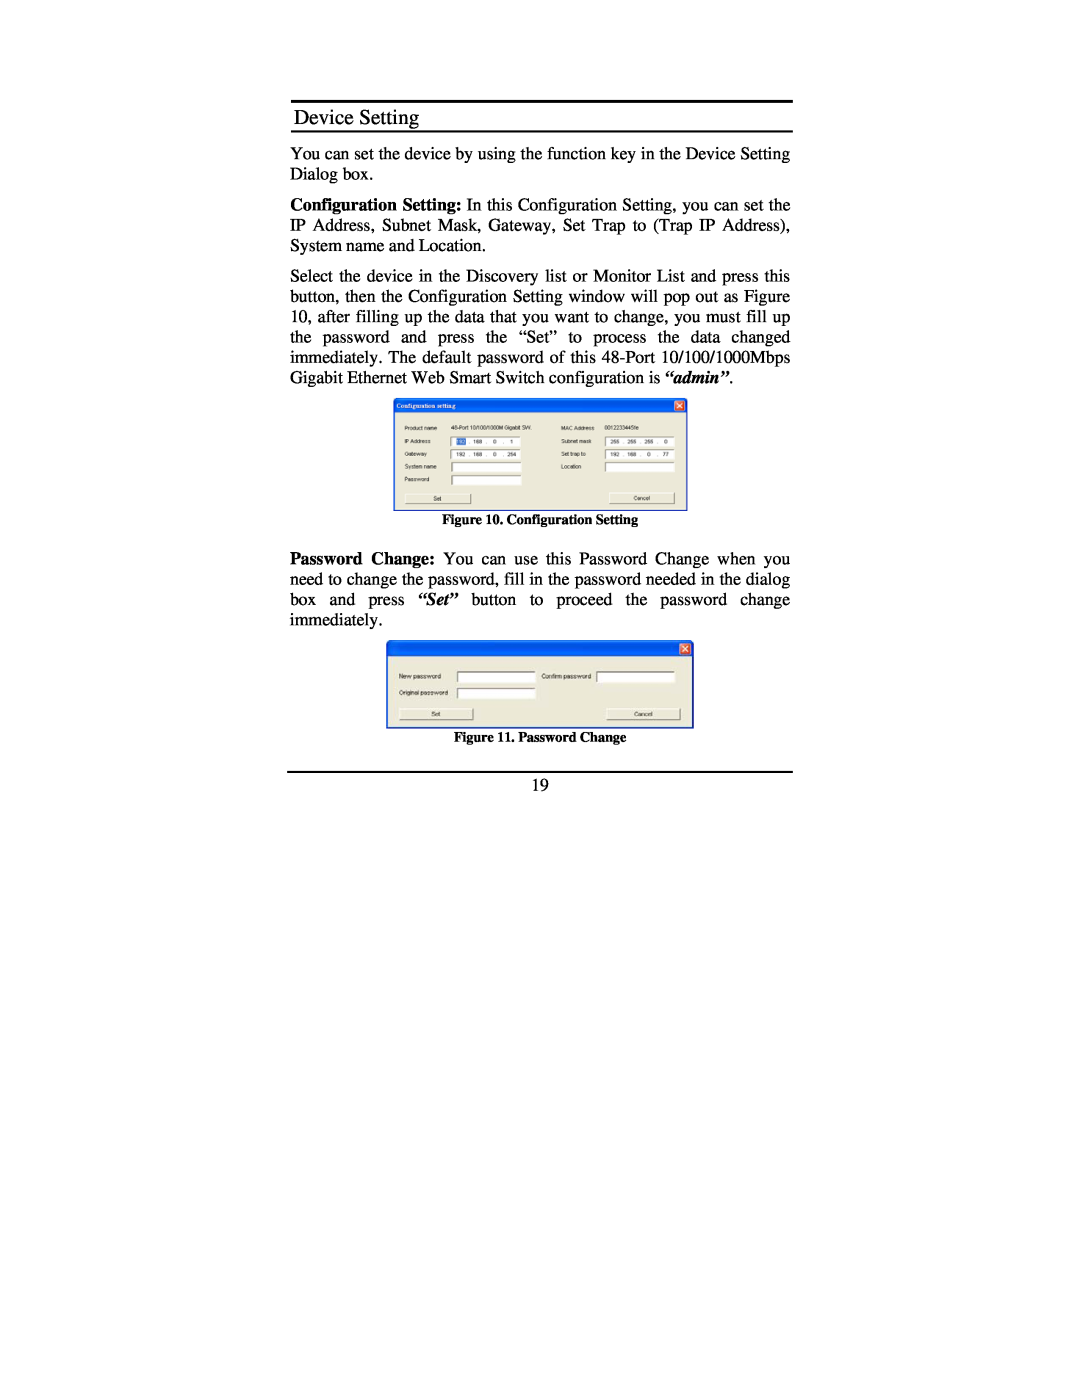 TRENDnet TEG-448WS manual Device Setting, Configuration Setting, Password Change 